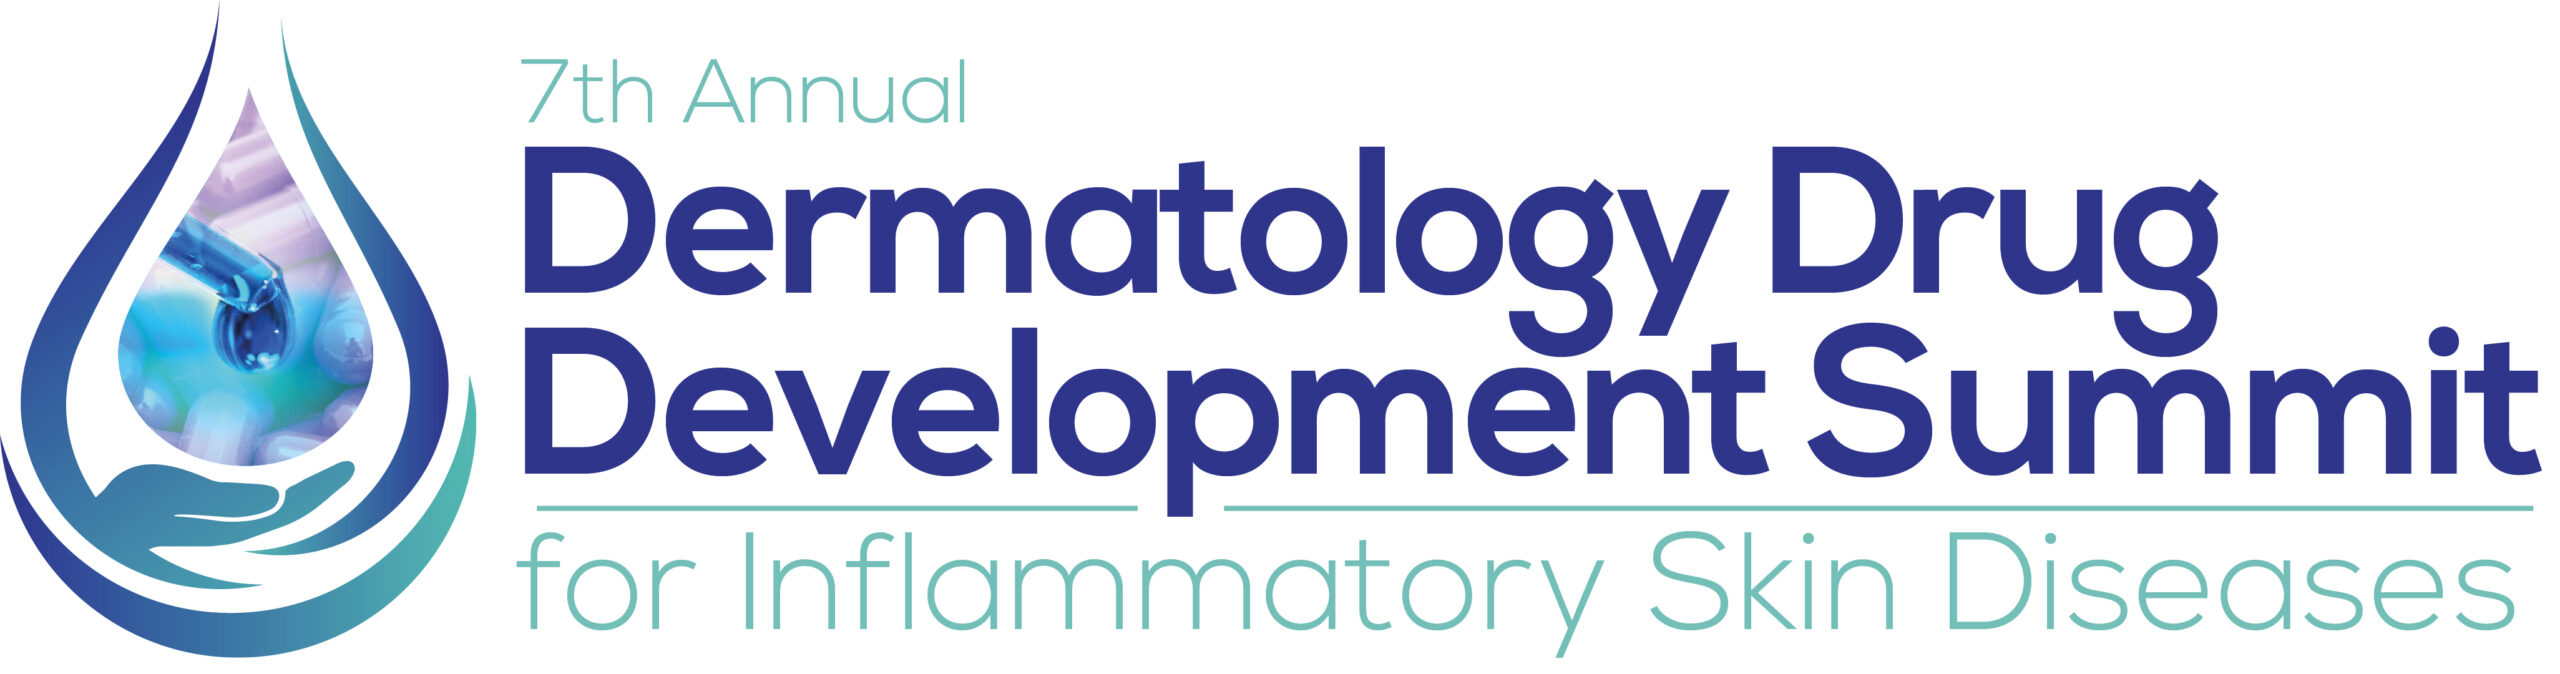 HW230406 7th Dermatology Drug Development Summit US logo